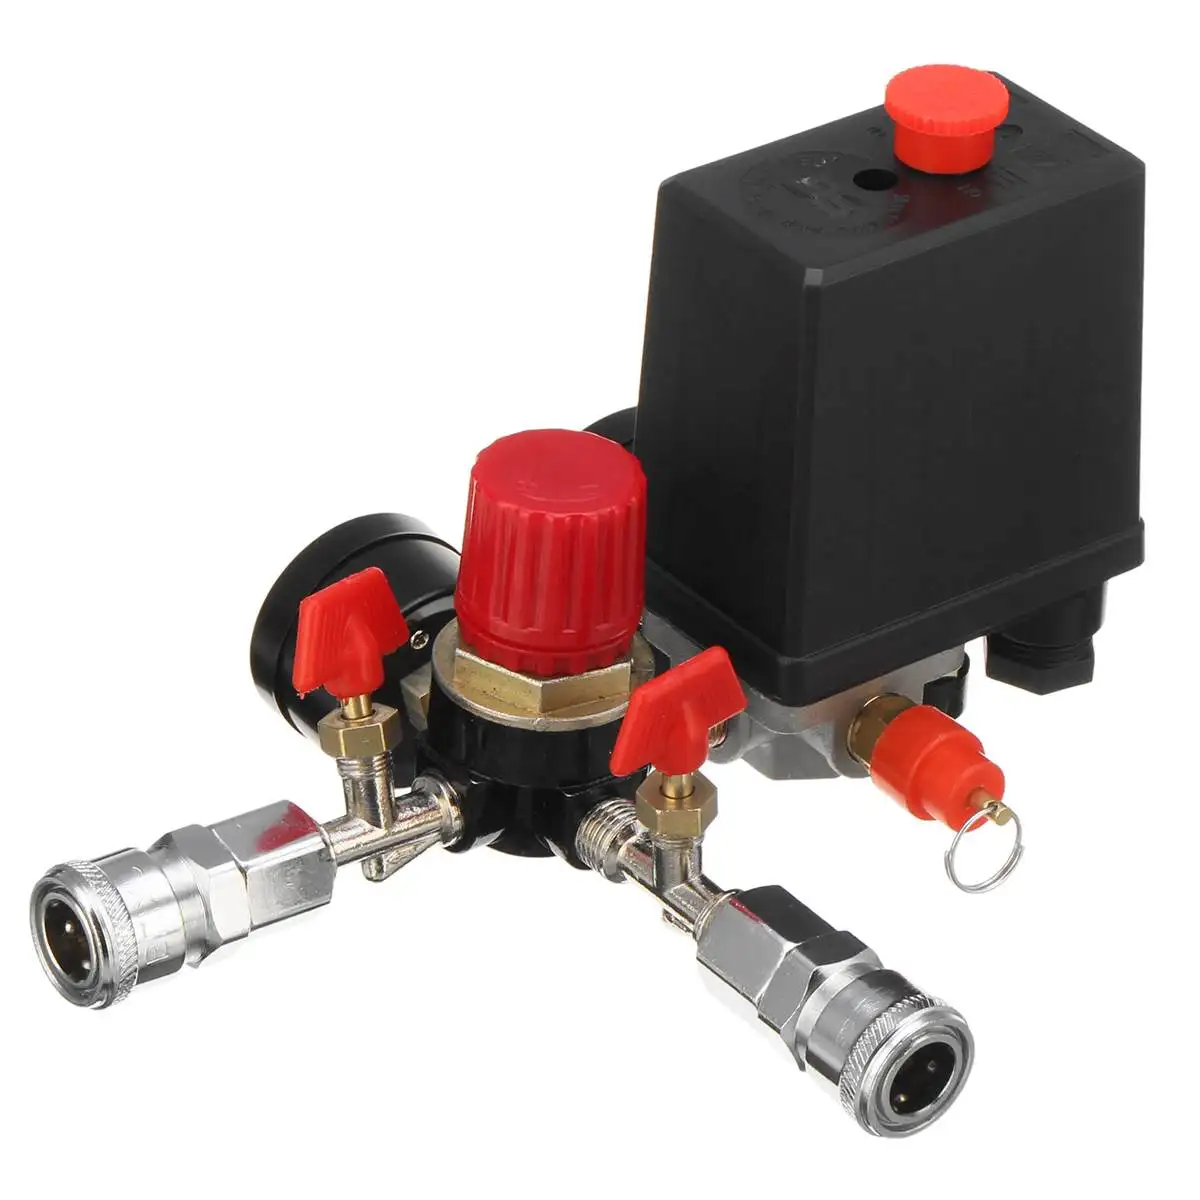 

240V 120PSI Air Compressor Pump Pressure Switch Control Valve Manifold Regulator With Quick Connector Gauges 95-125 PSI